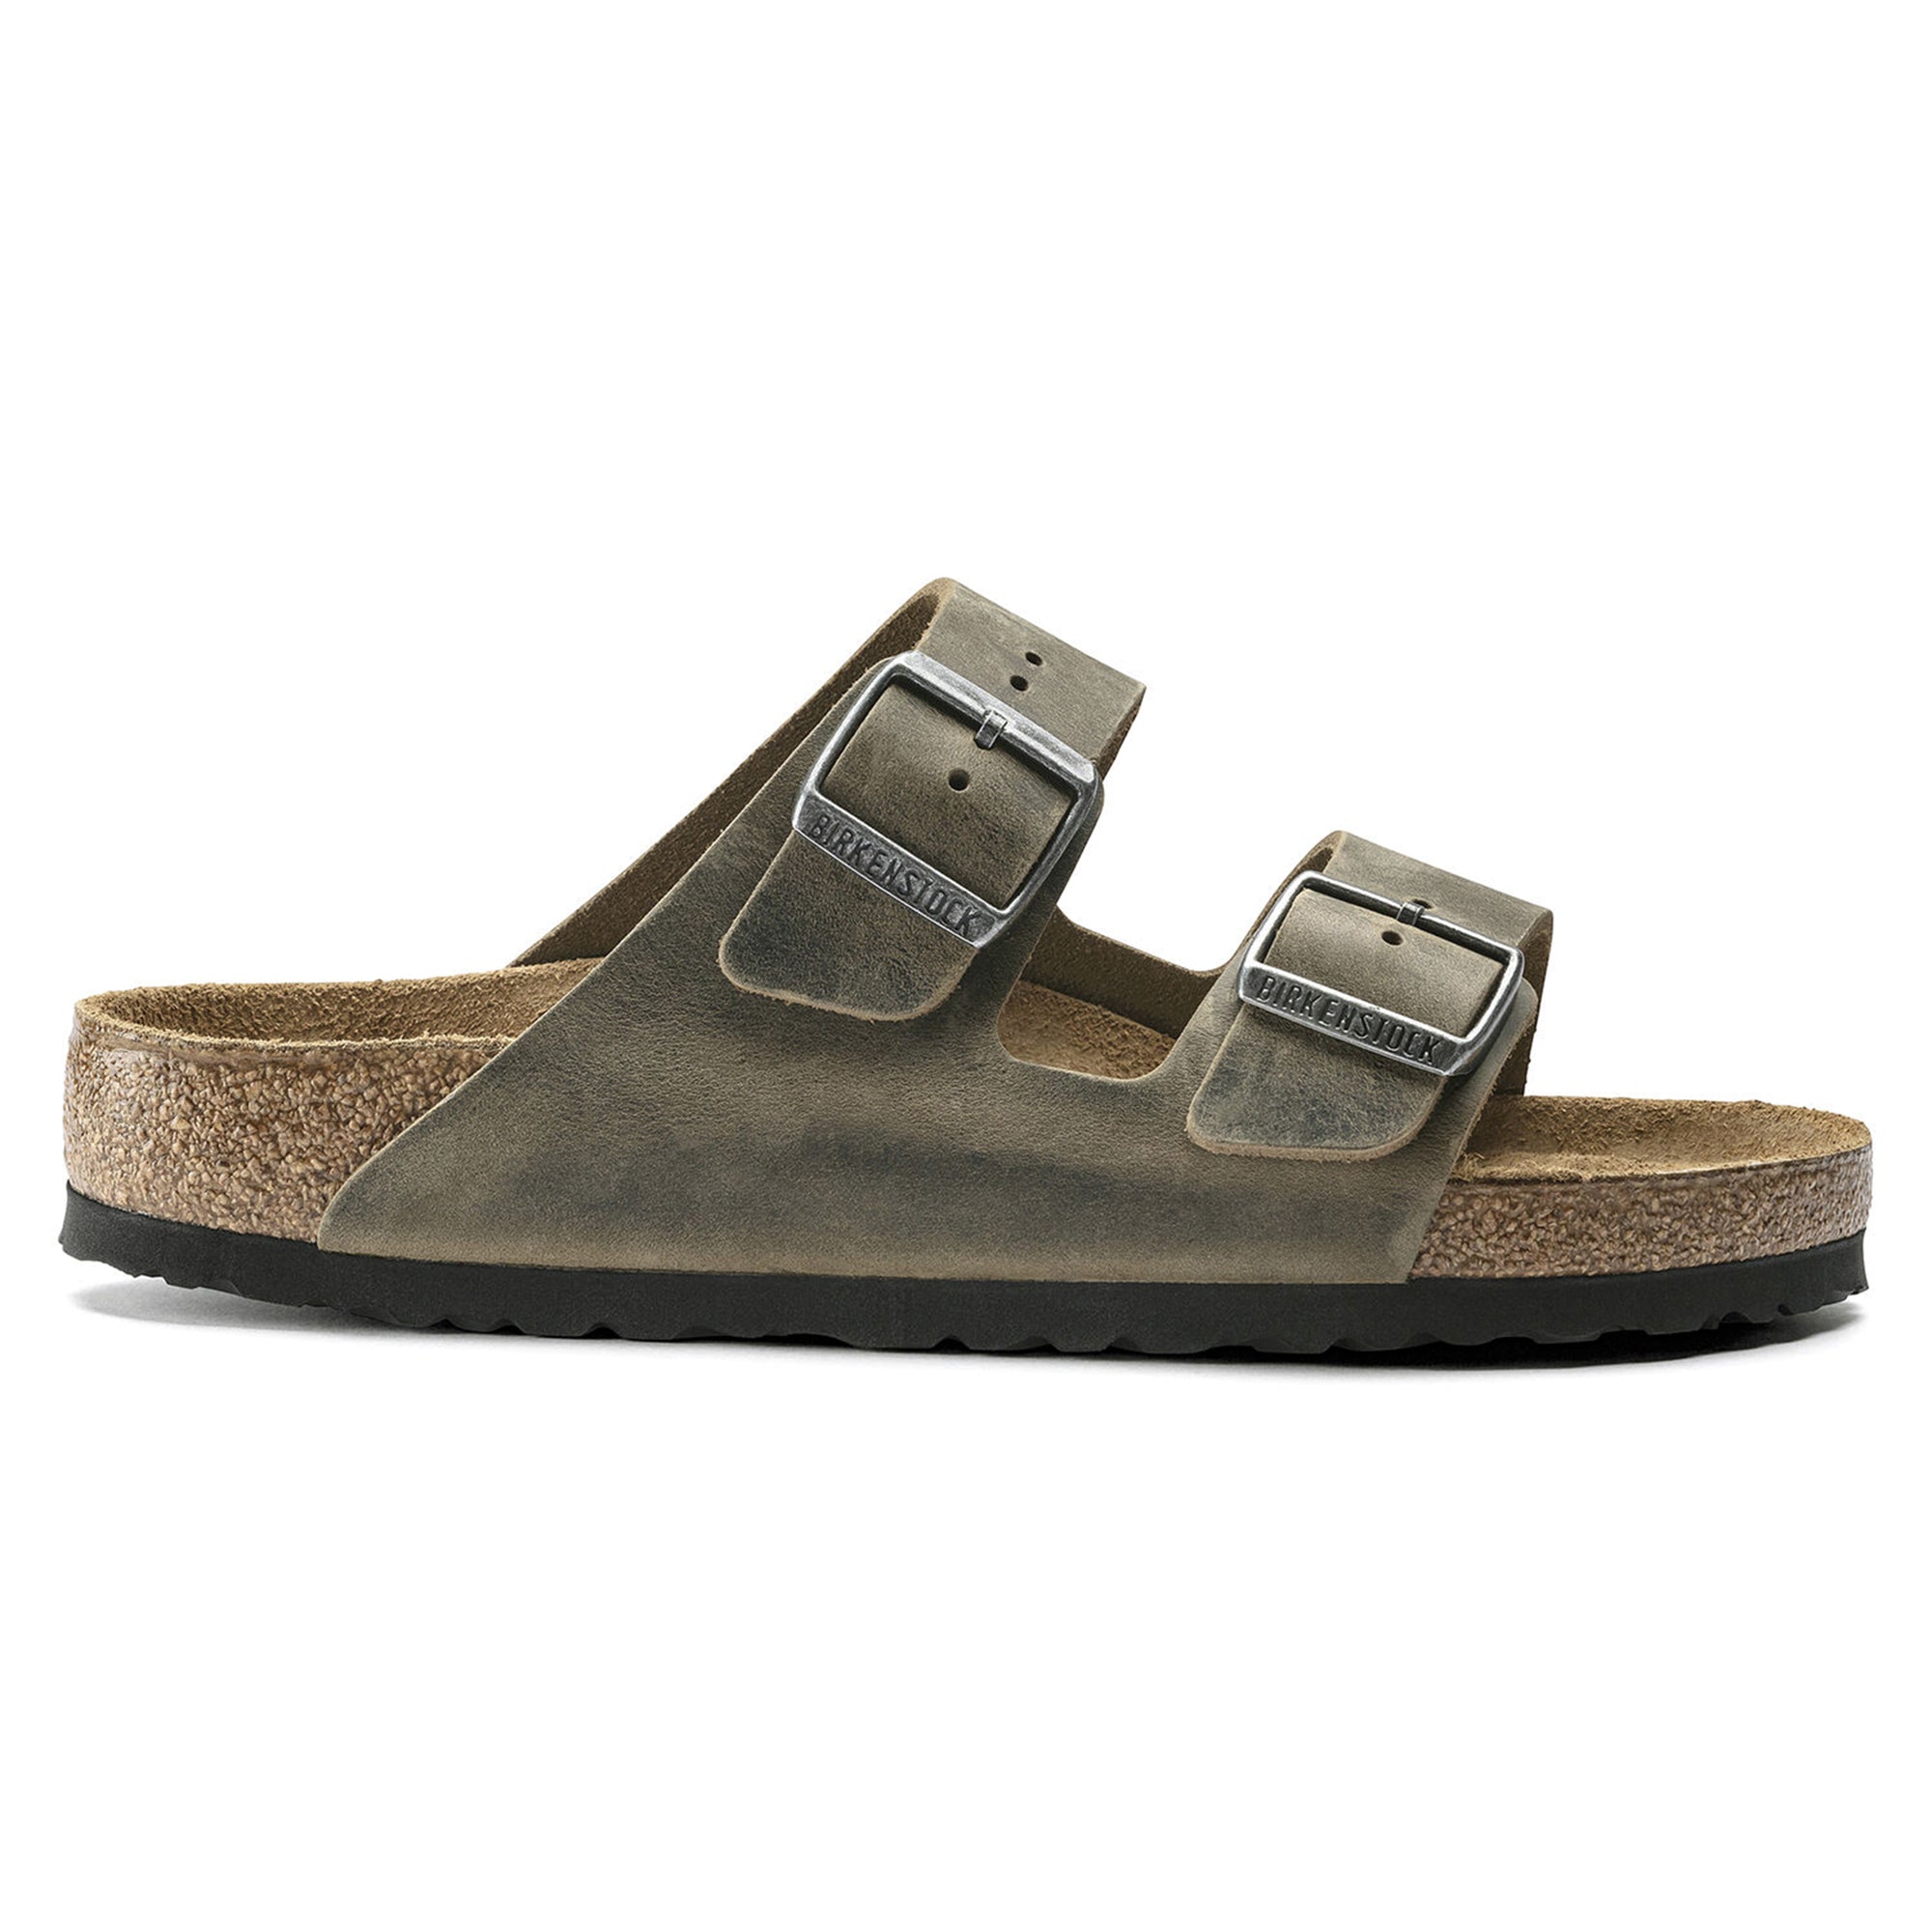 Birkenstock Arizona SFB Sandals - Faded Khaki Oiled Leather